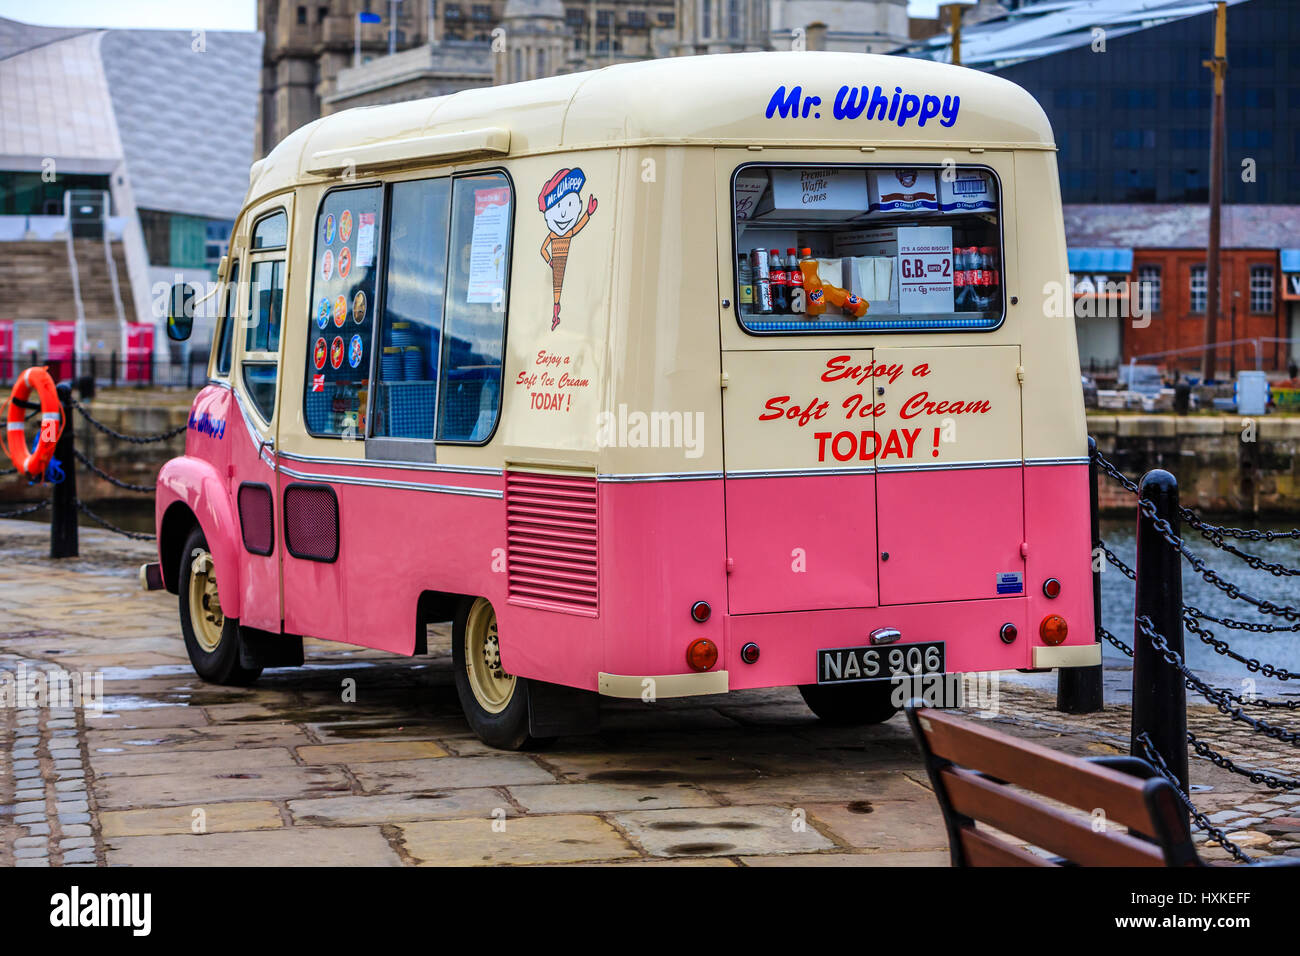 Mr Whippy Ice cream van at Albert Dock Liverpool Stock Photo